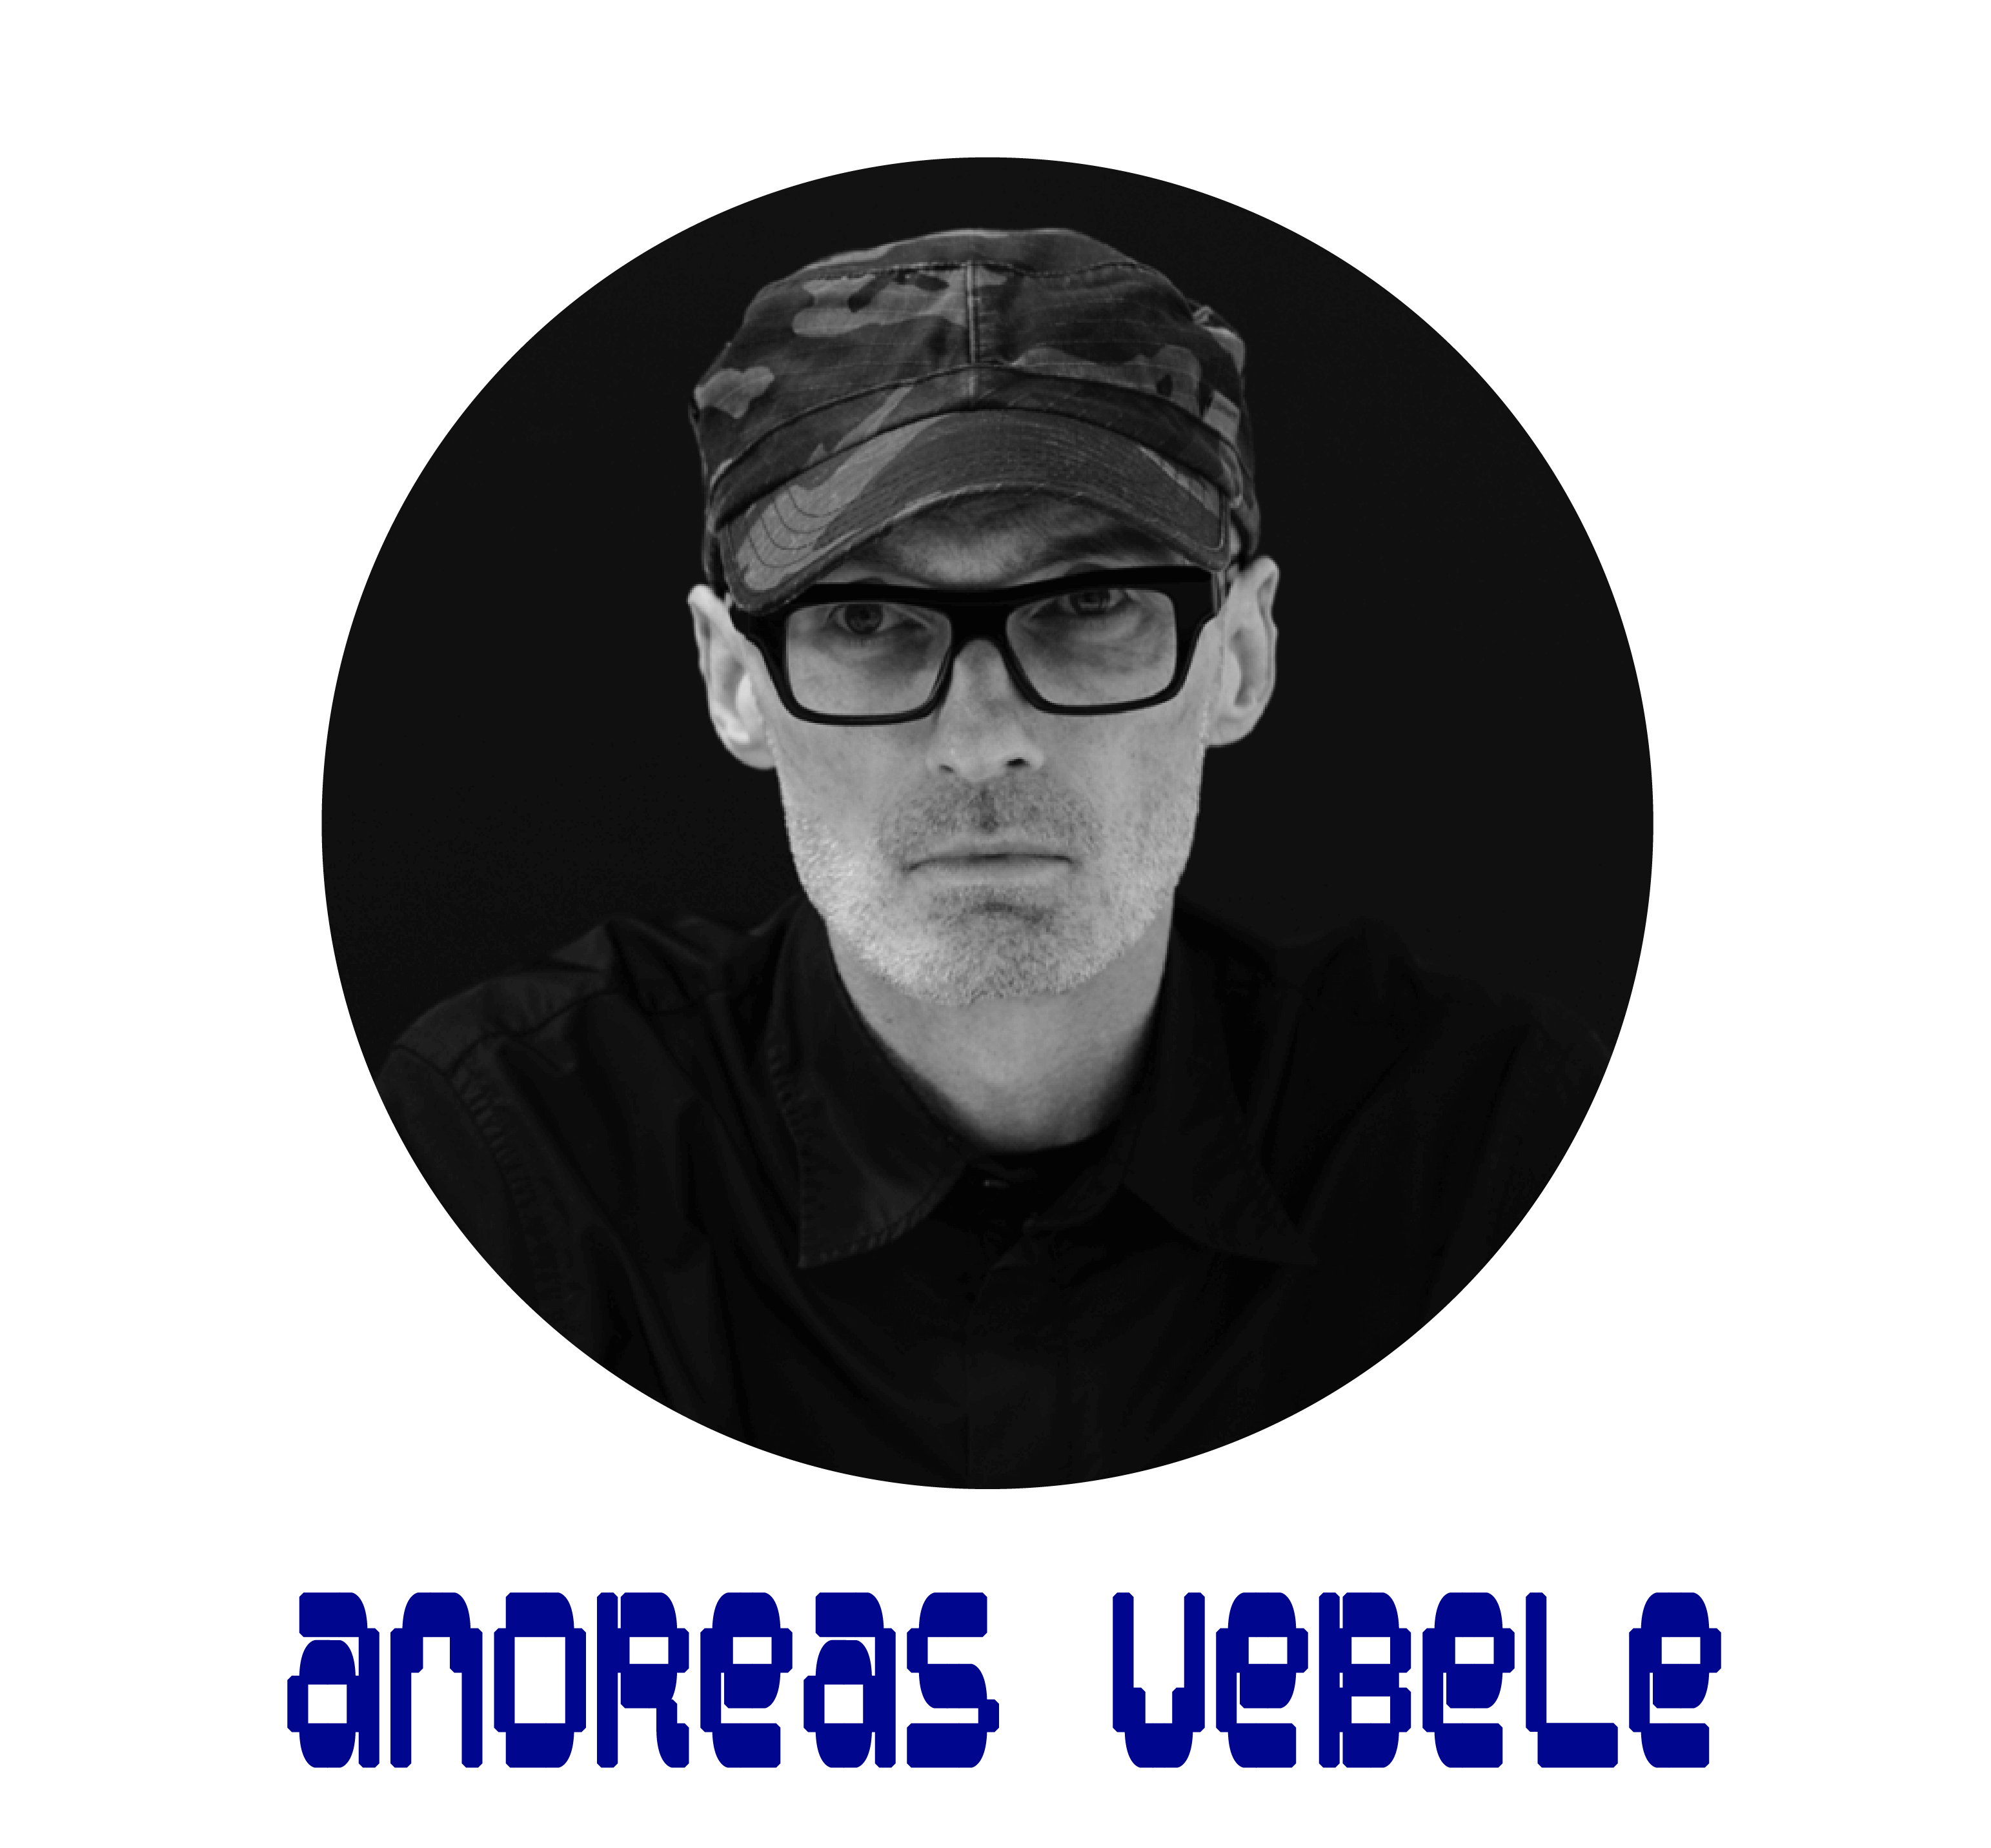 Andreas Uebele